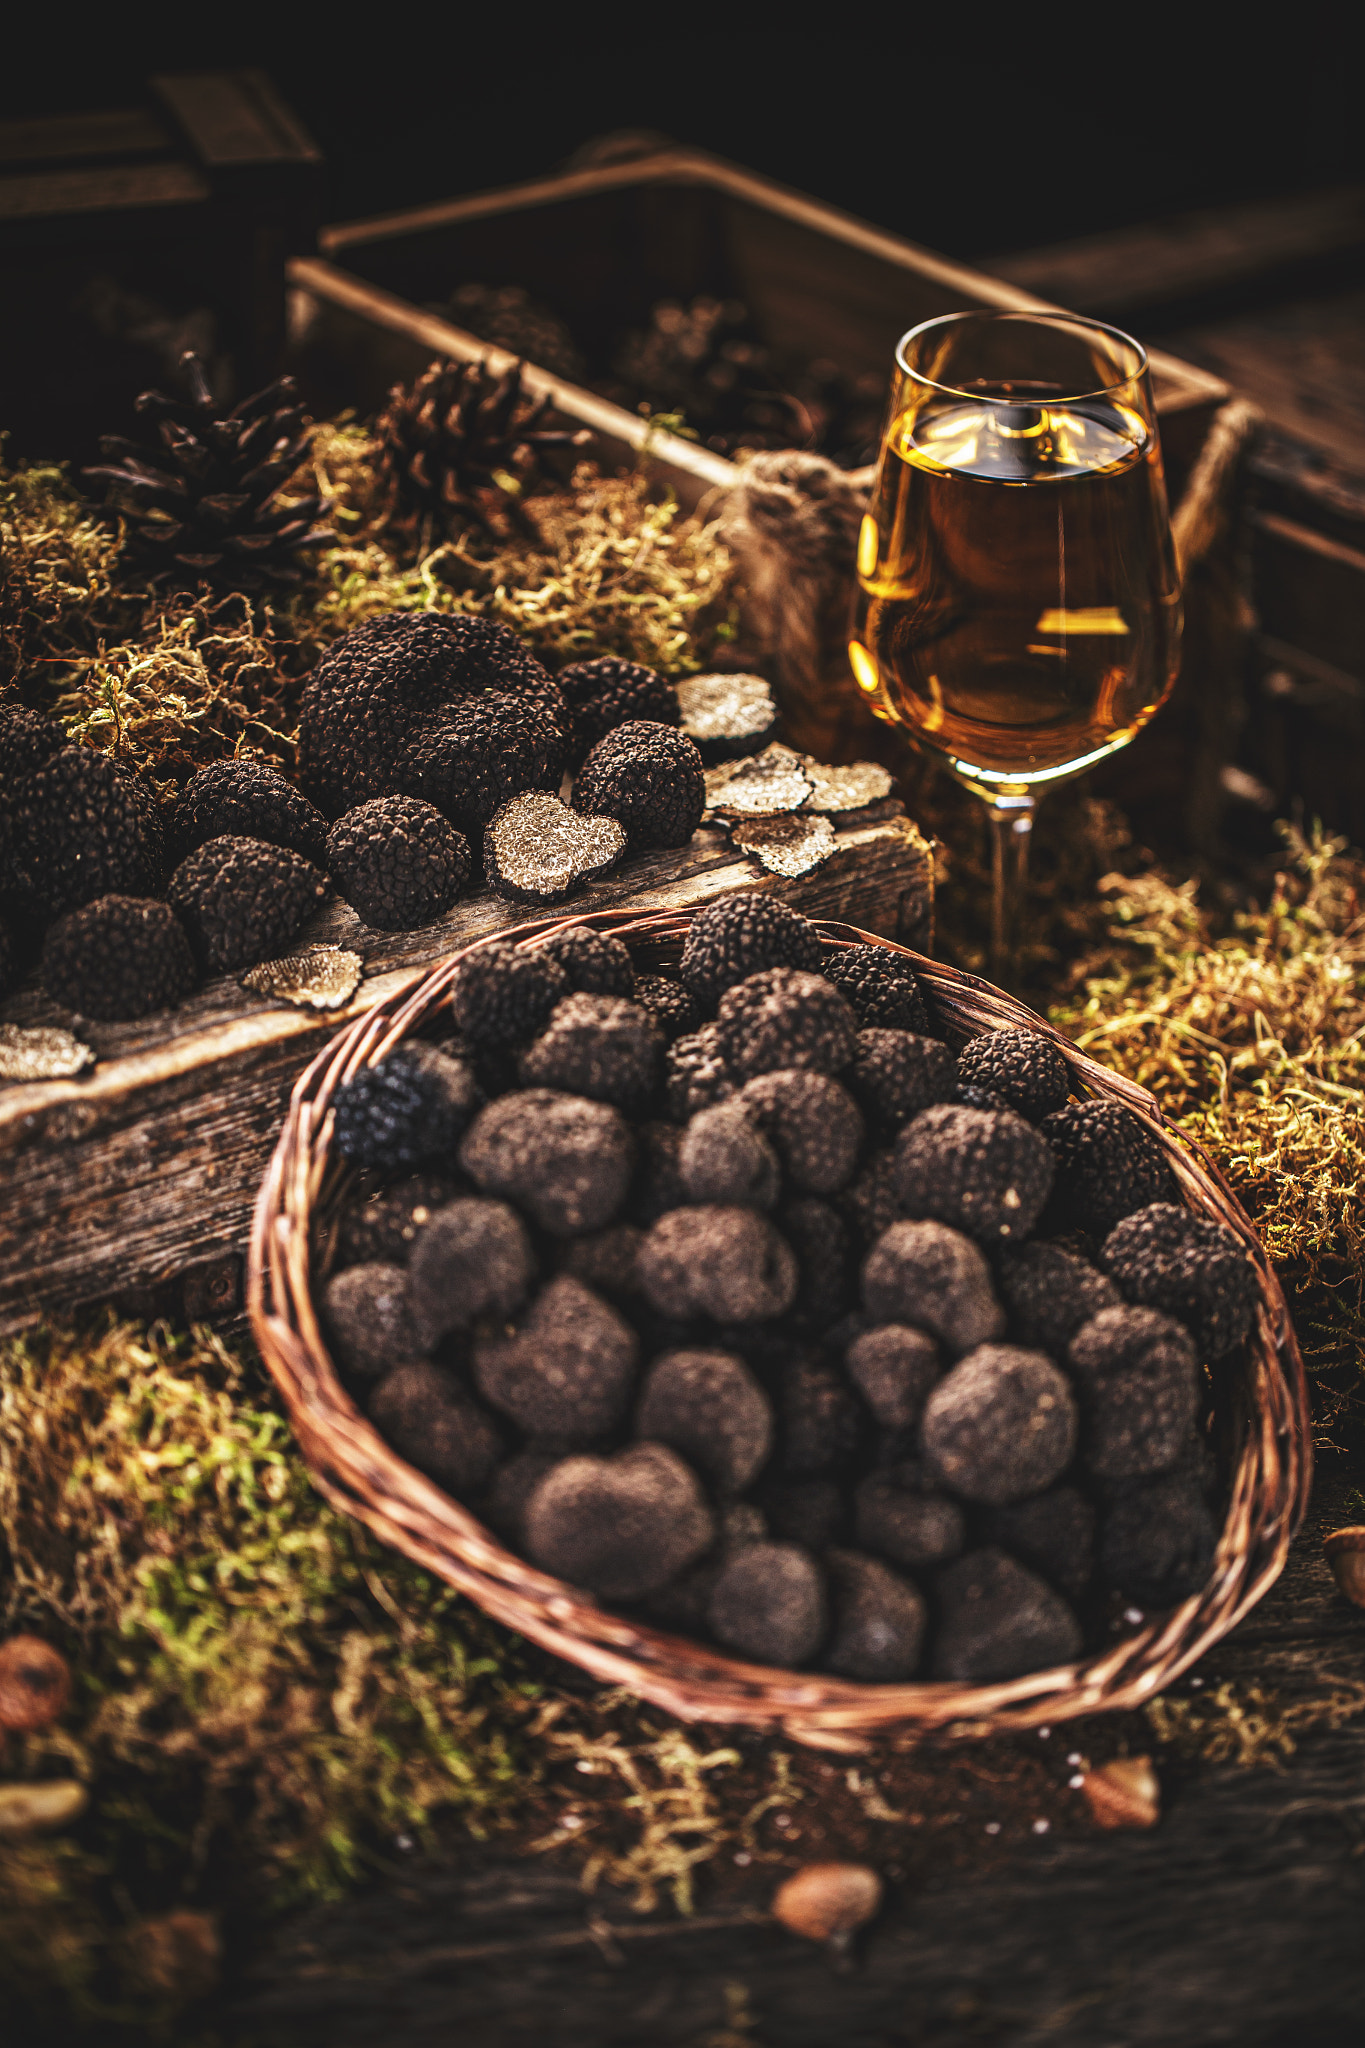 Freshly picked black truffles